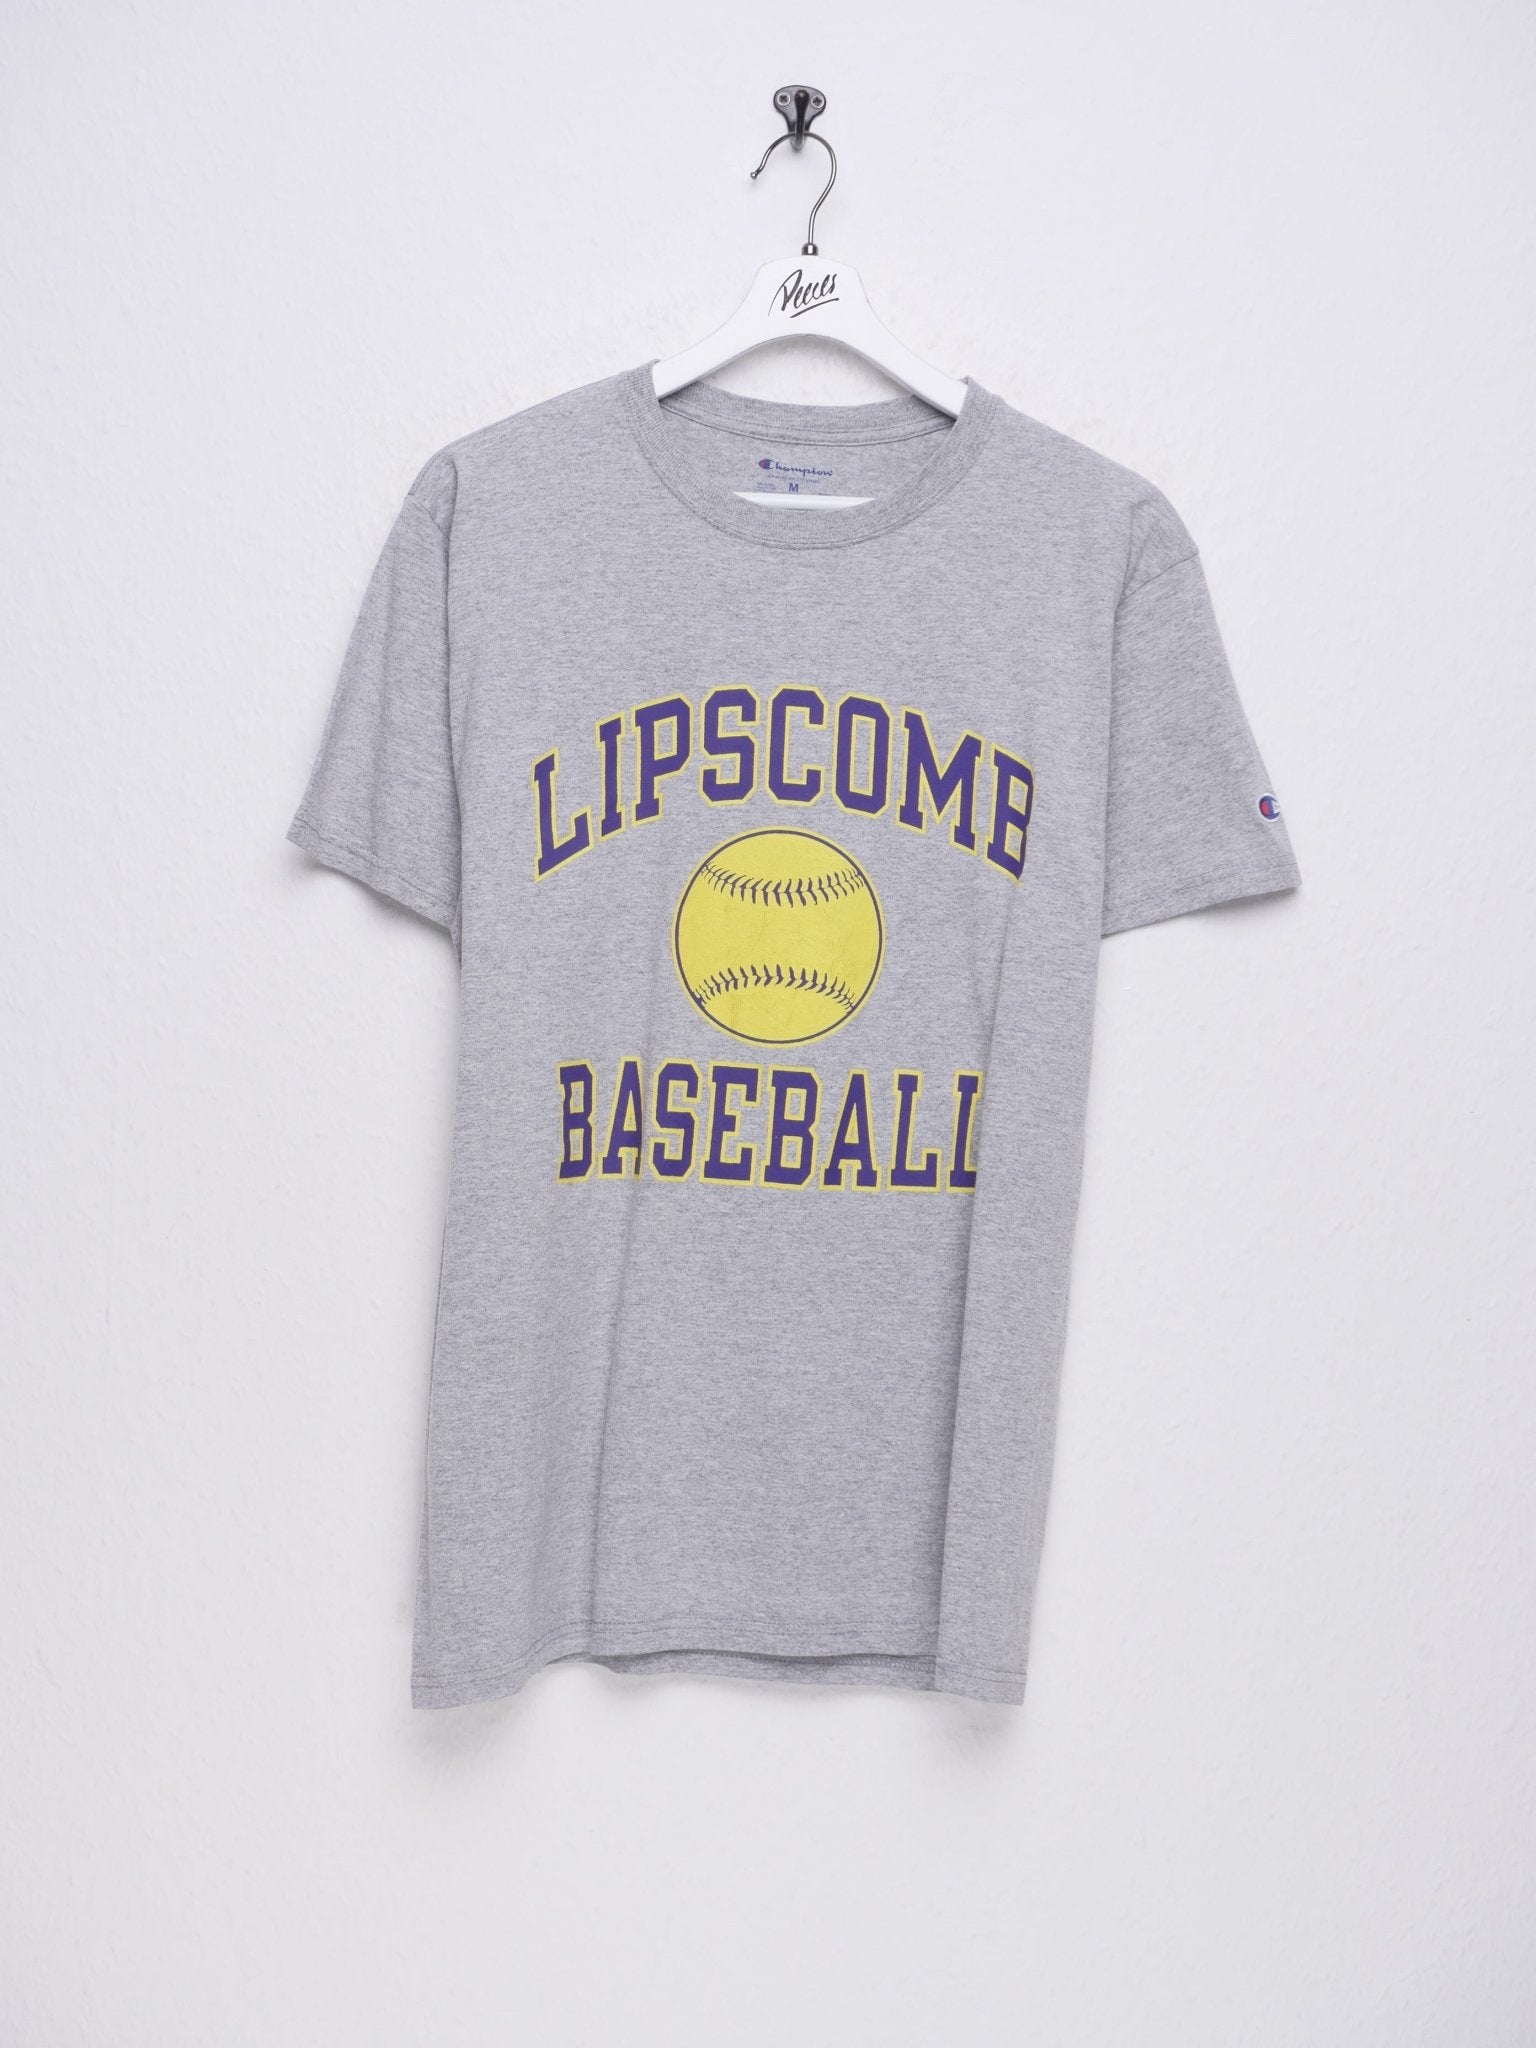 Champion printed Lipscome Baseball Spellout Vintage Shirt - Peeces